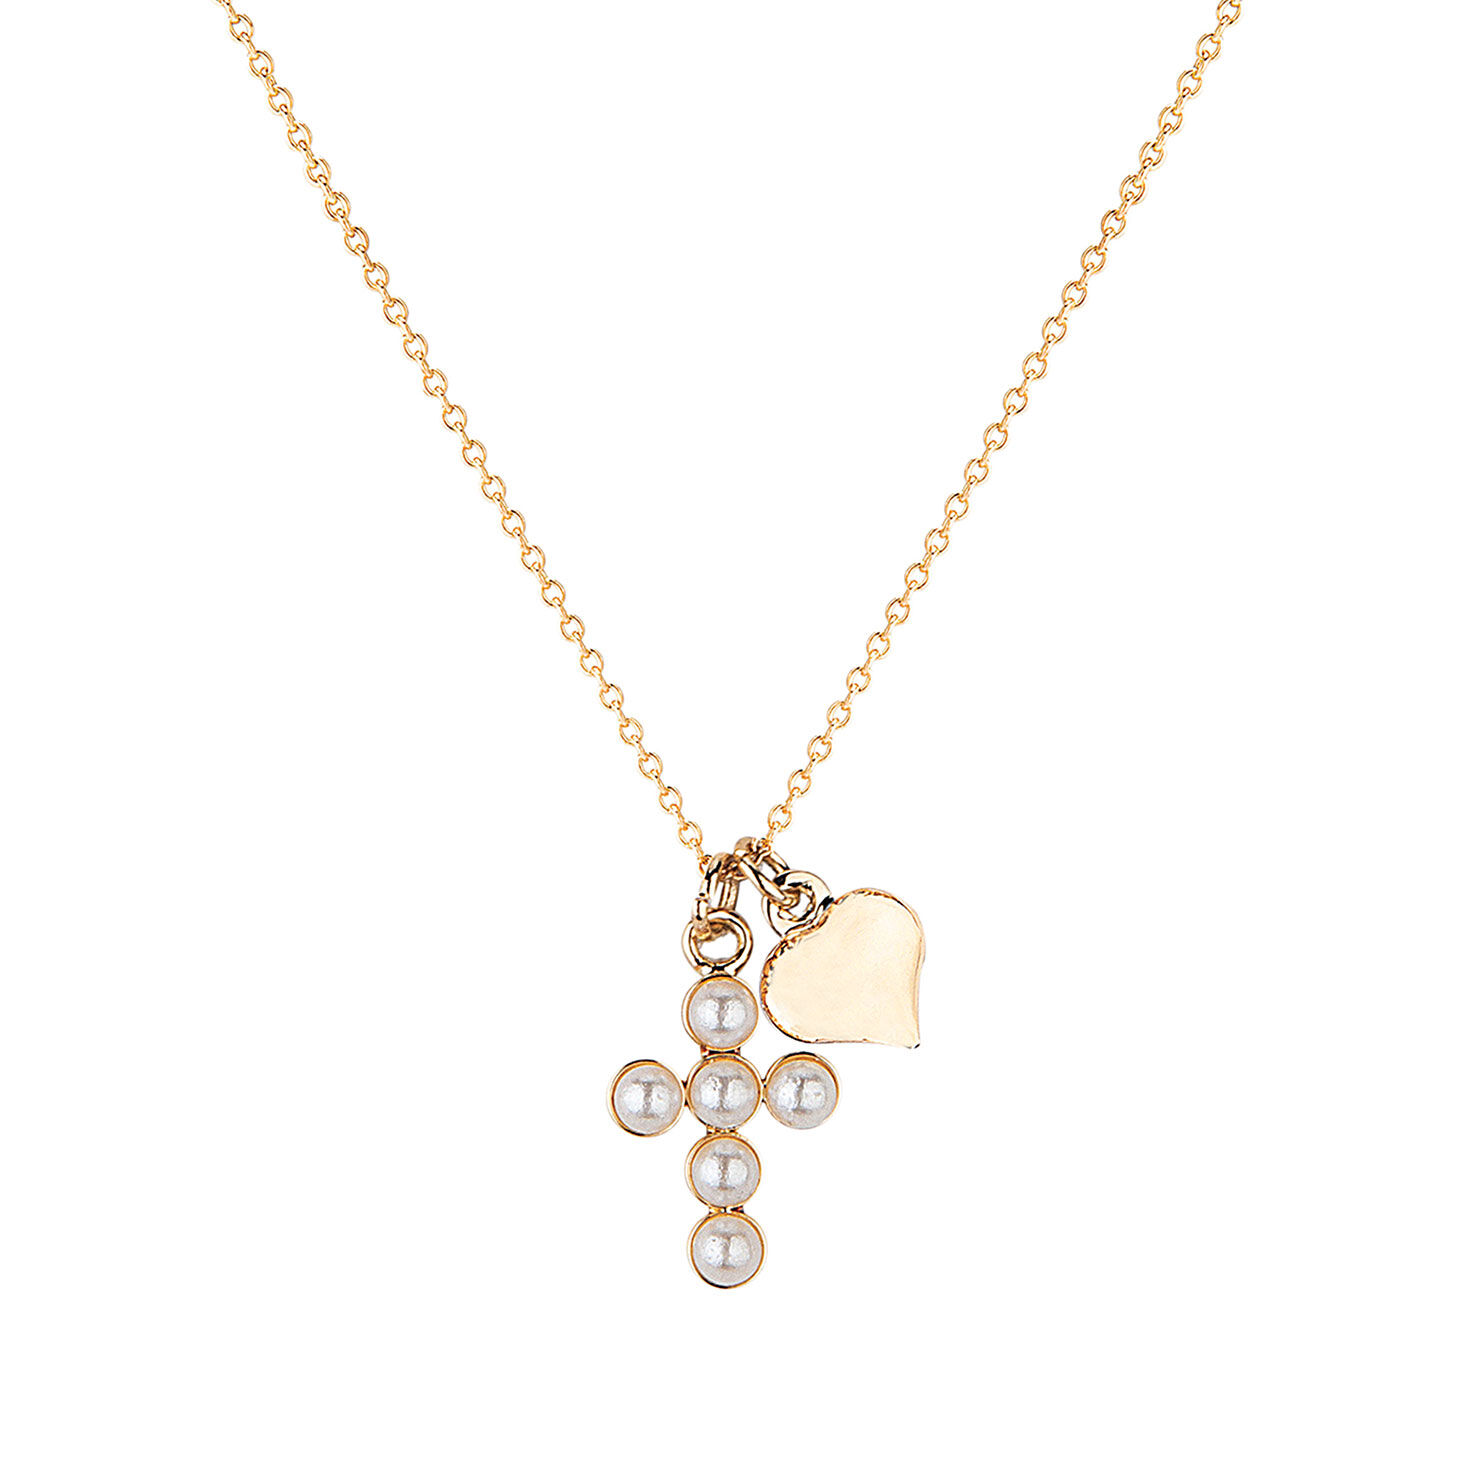 Antique Gold Necklace/Gold choker Necklace/ Floral necklace/indian cho |  Erajewels